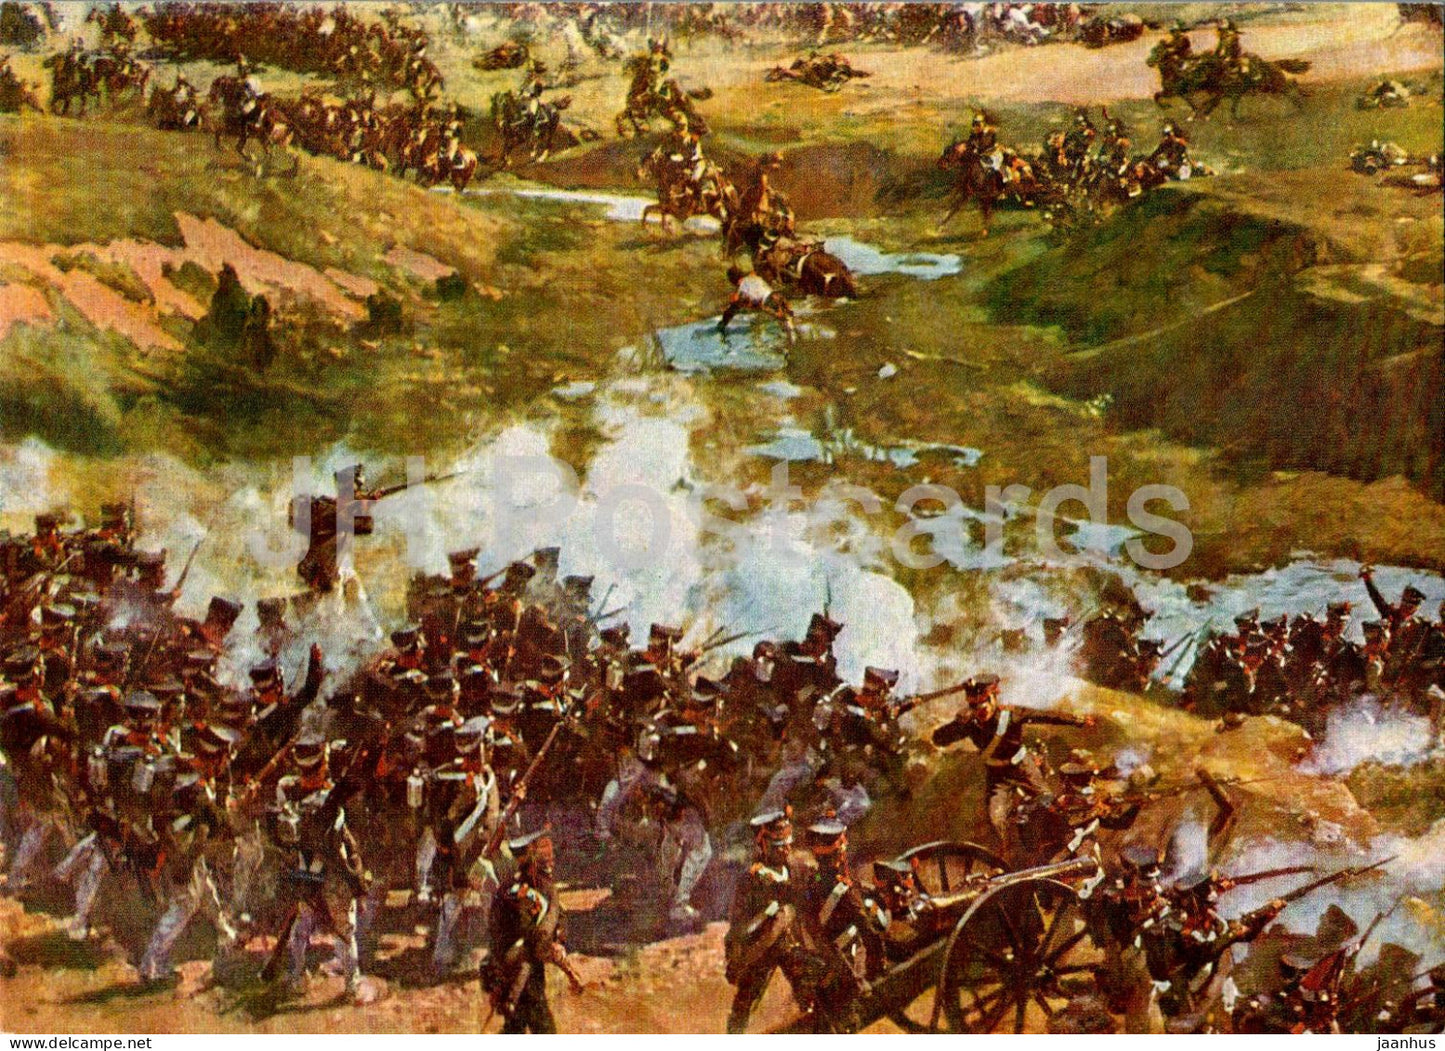 Battle of Borodino - Semyonovsk ravine - panorama - painting by F. Rubo - 1966 - Russia USSR - unused - JH Postcards